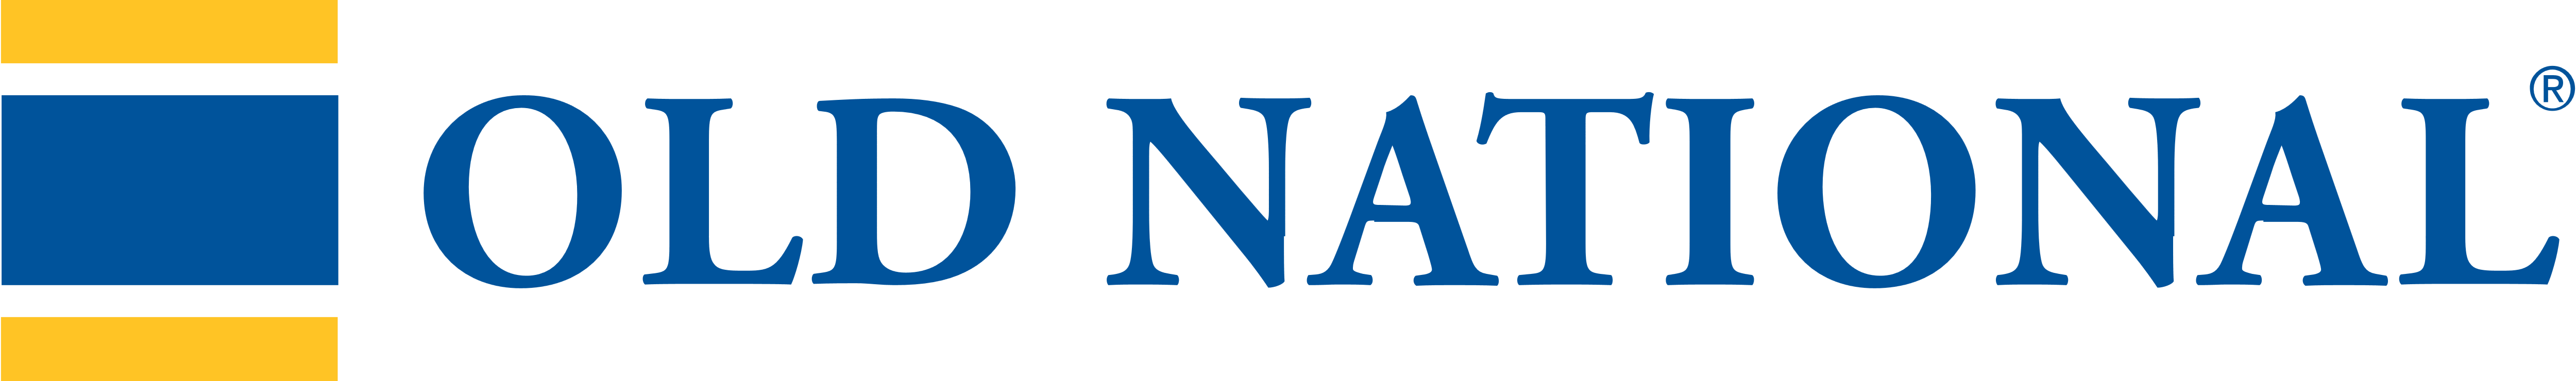 Old National Bank Logos Download